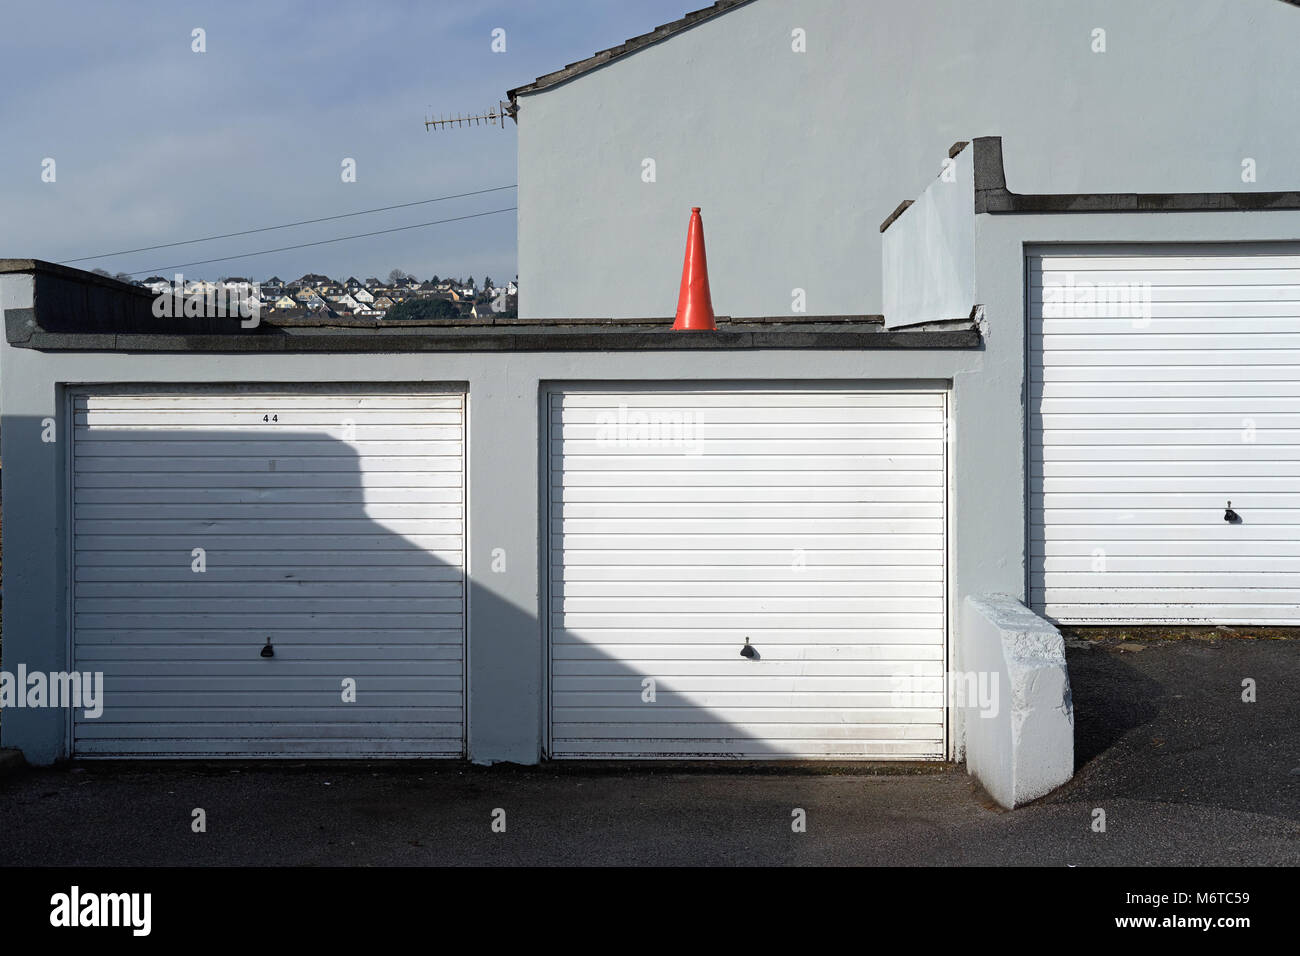 A traffic bollard on a garage roof Stock Photo